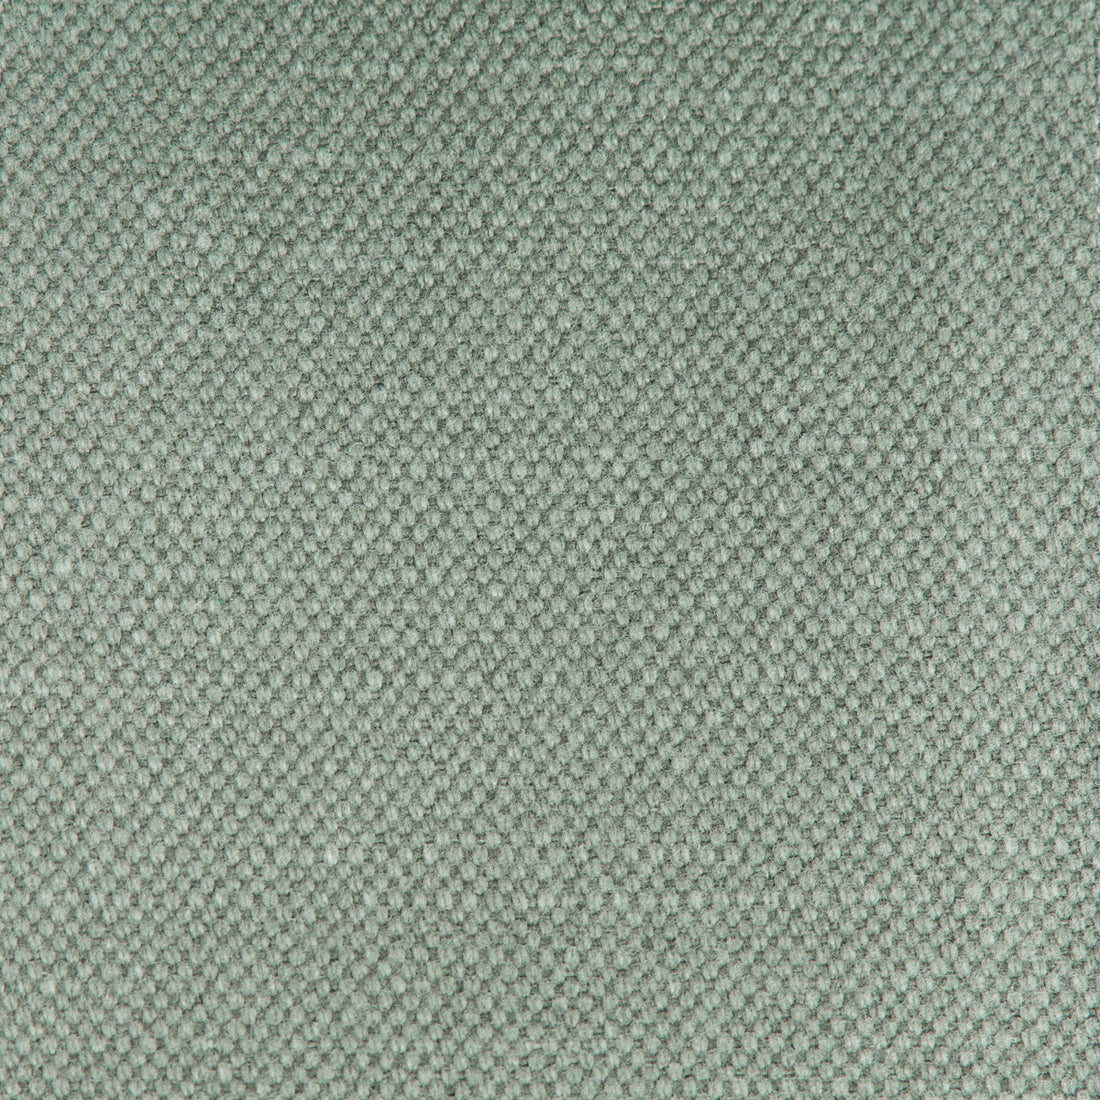 Lima fabric in acero color - pattern GDT5616.030.0 - by Gaston y Daniela in the Gaston Nuevo Mundo collection